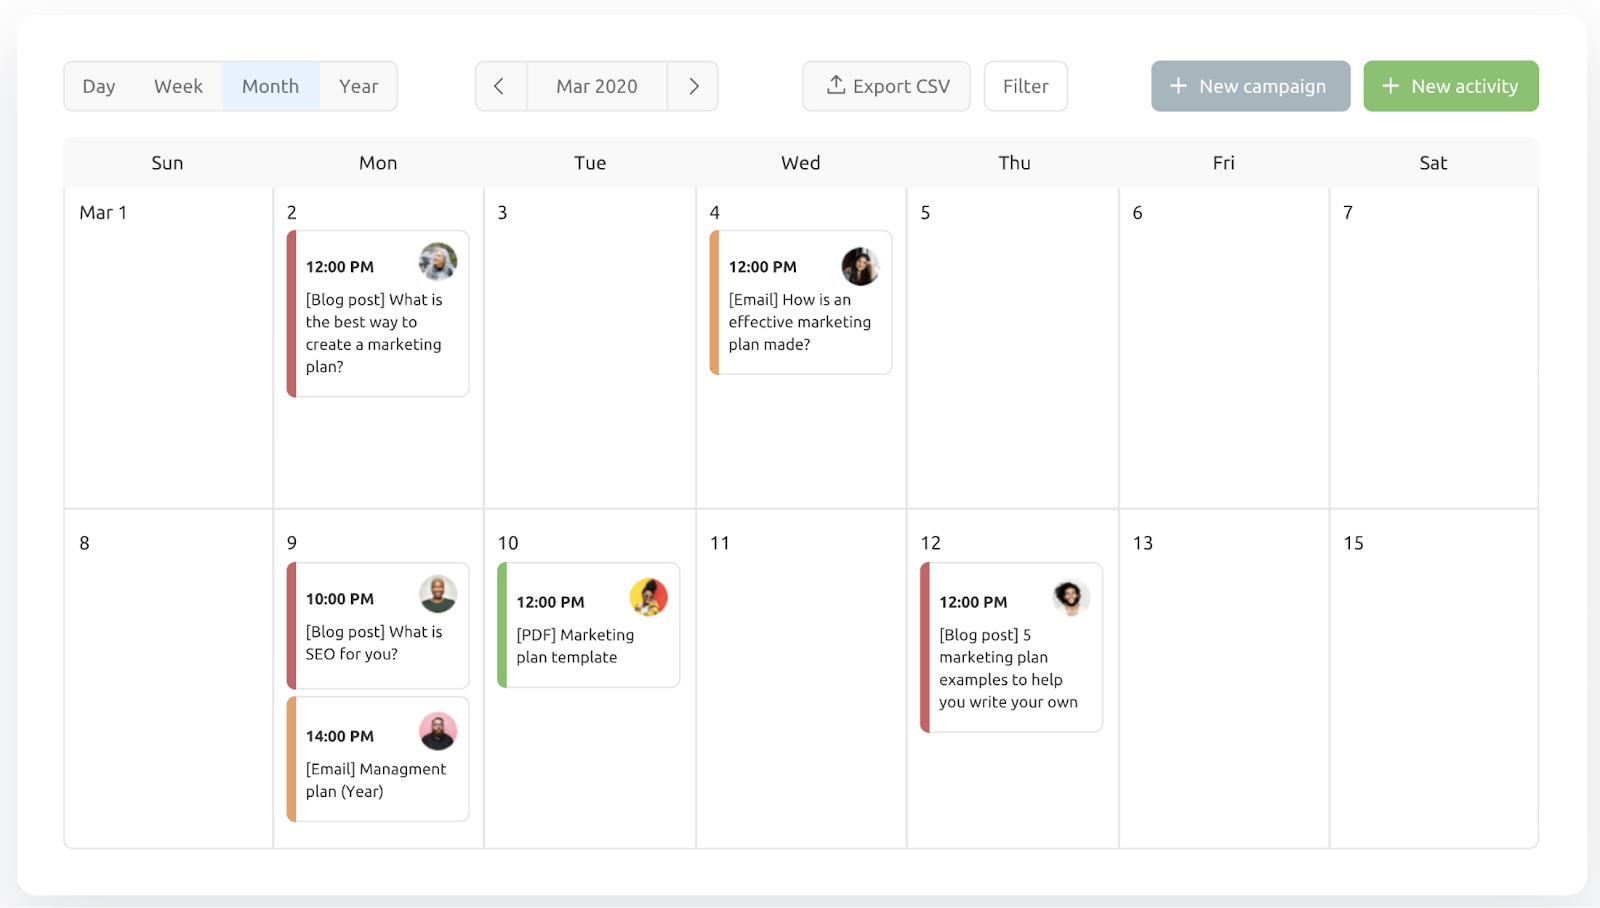 Marketing Calendar tool